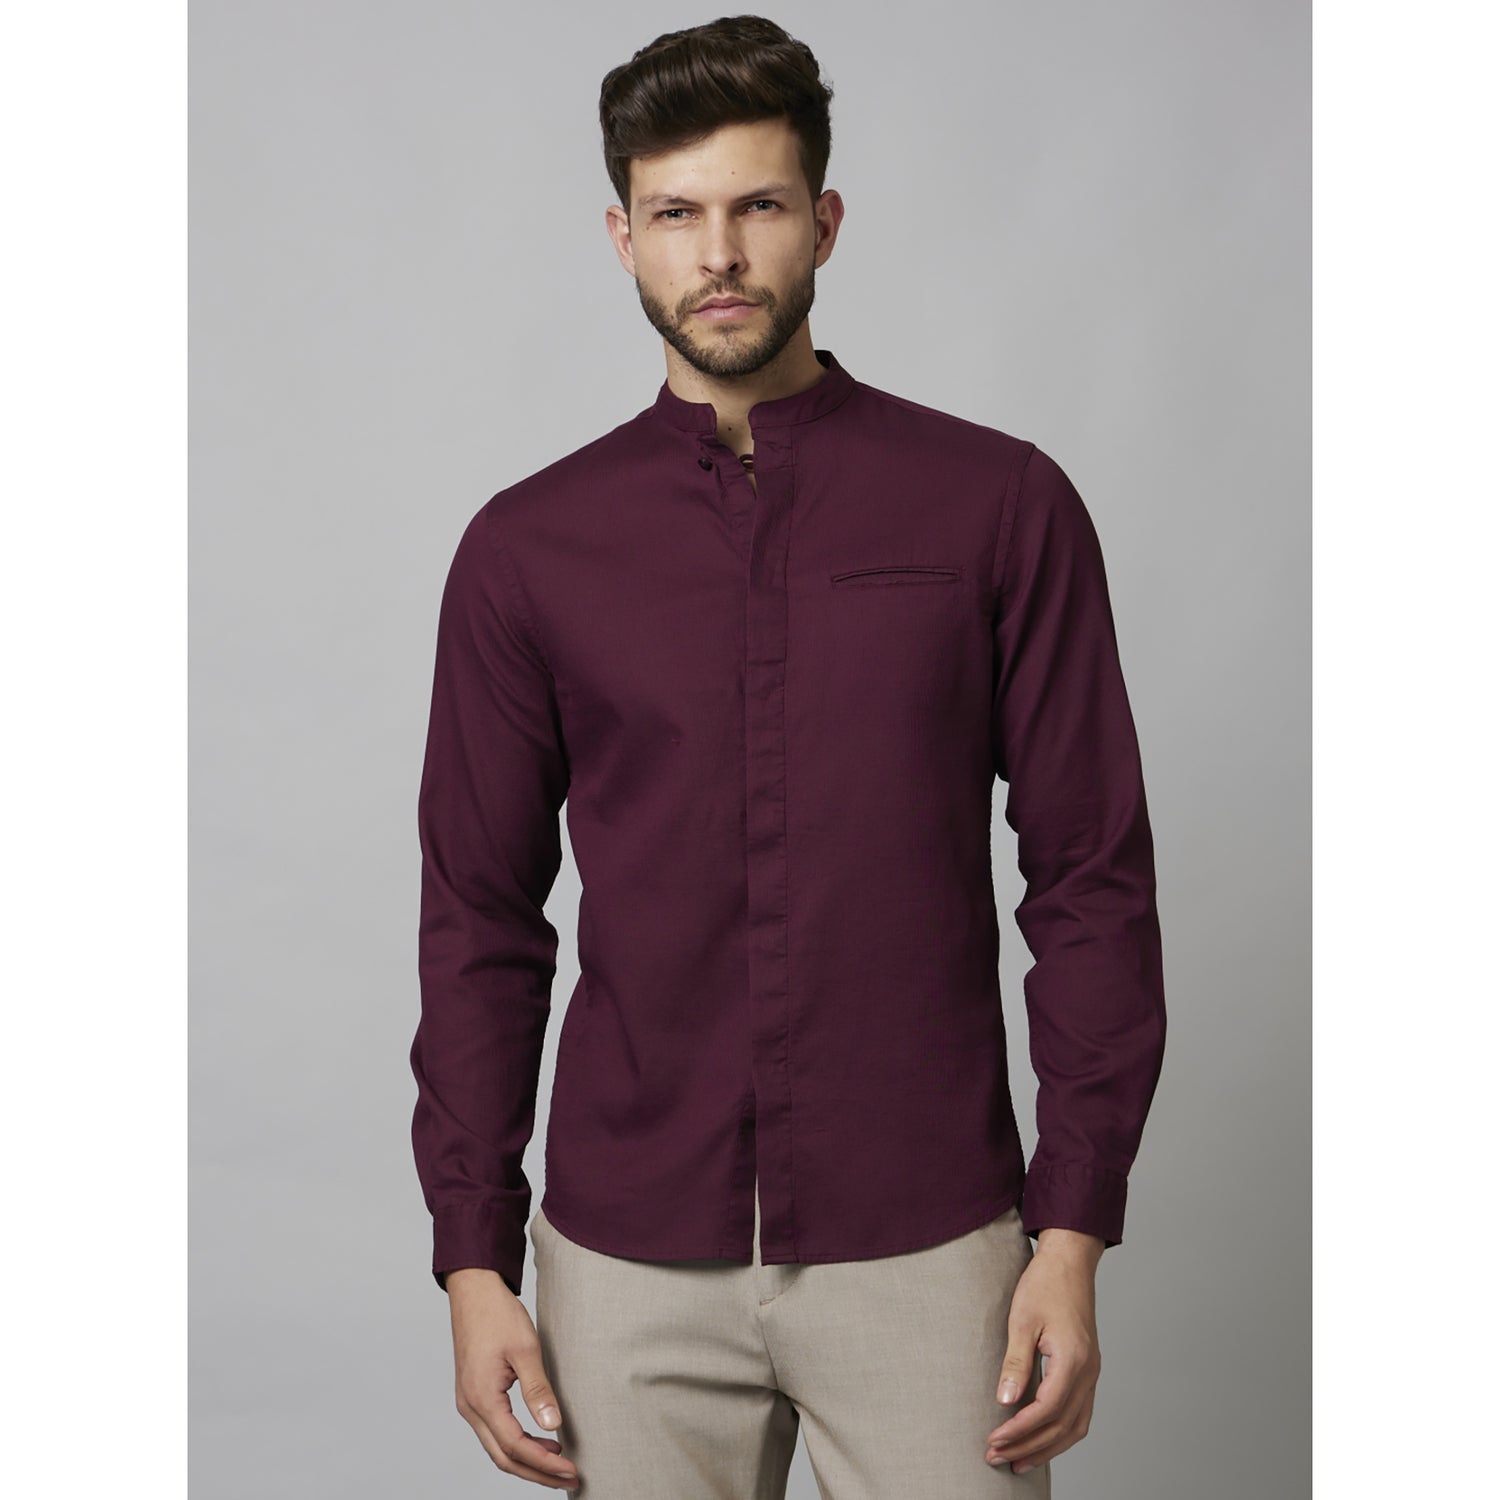 Burgundy Mandarin Collar Cotton Classic Regular Fit Shirt (NAINDISH)